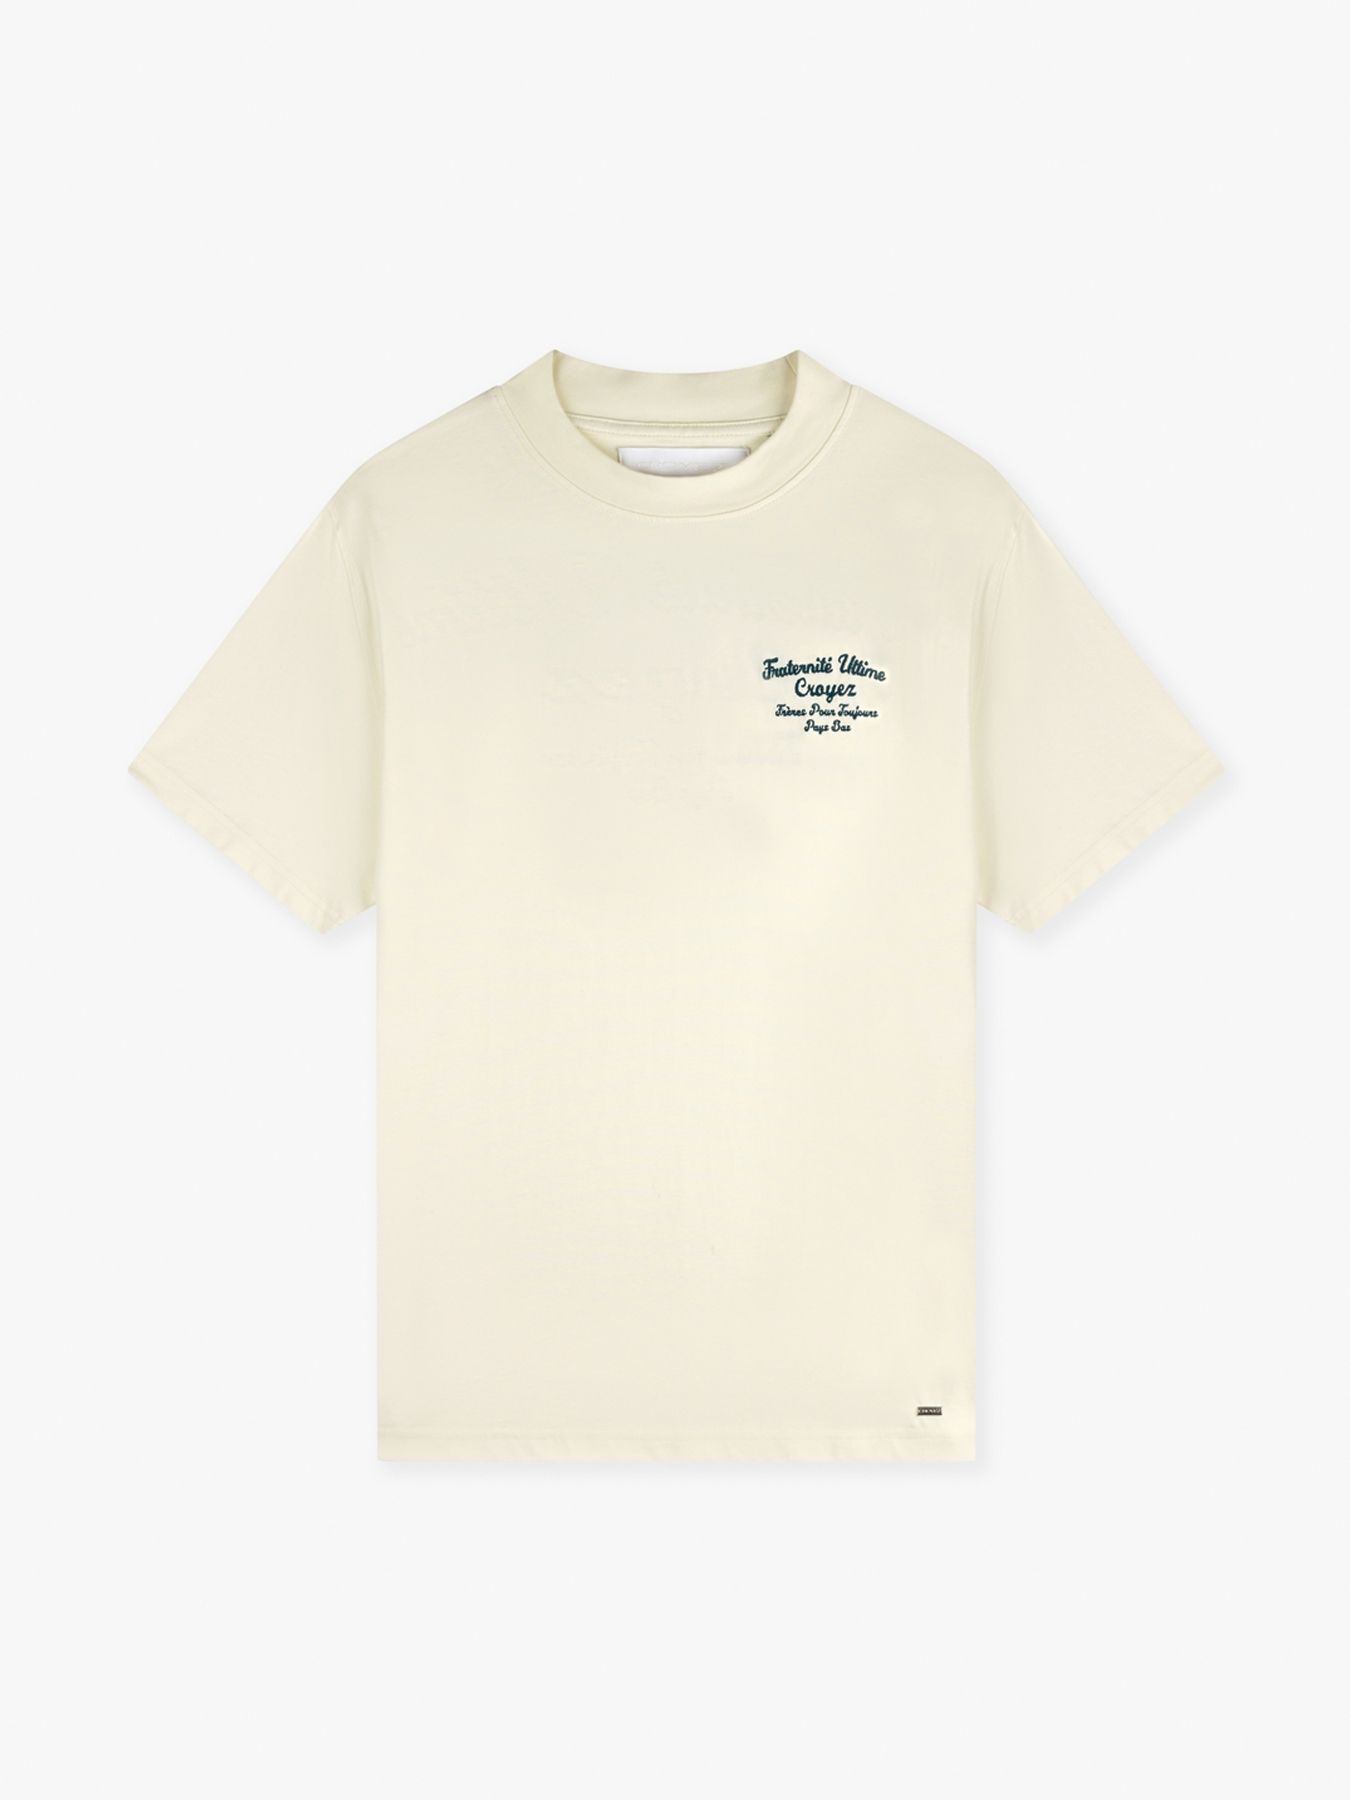 Croyez Fraternite T-shirt Buttercream/petrol 2900147001039